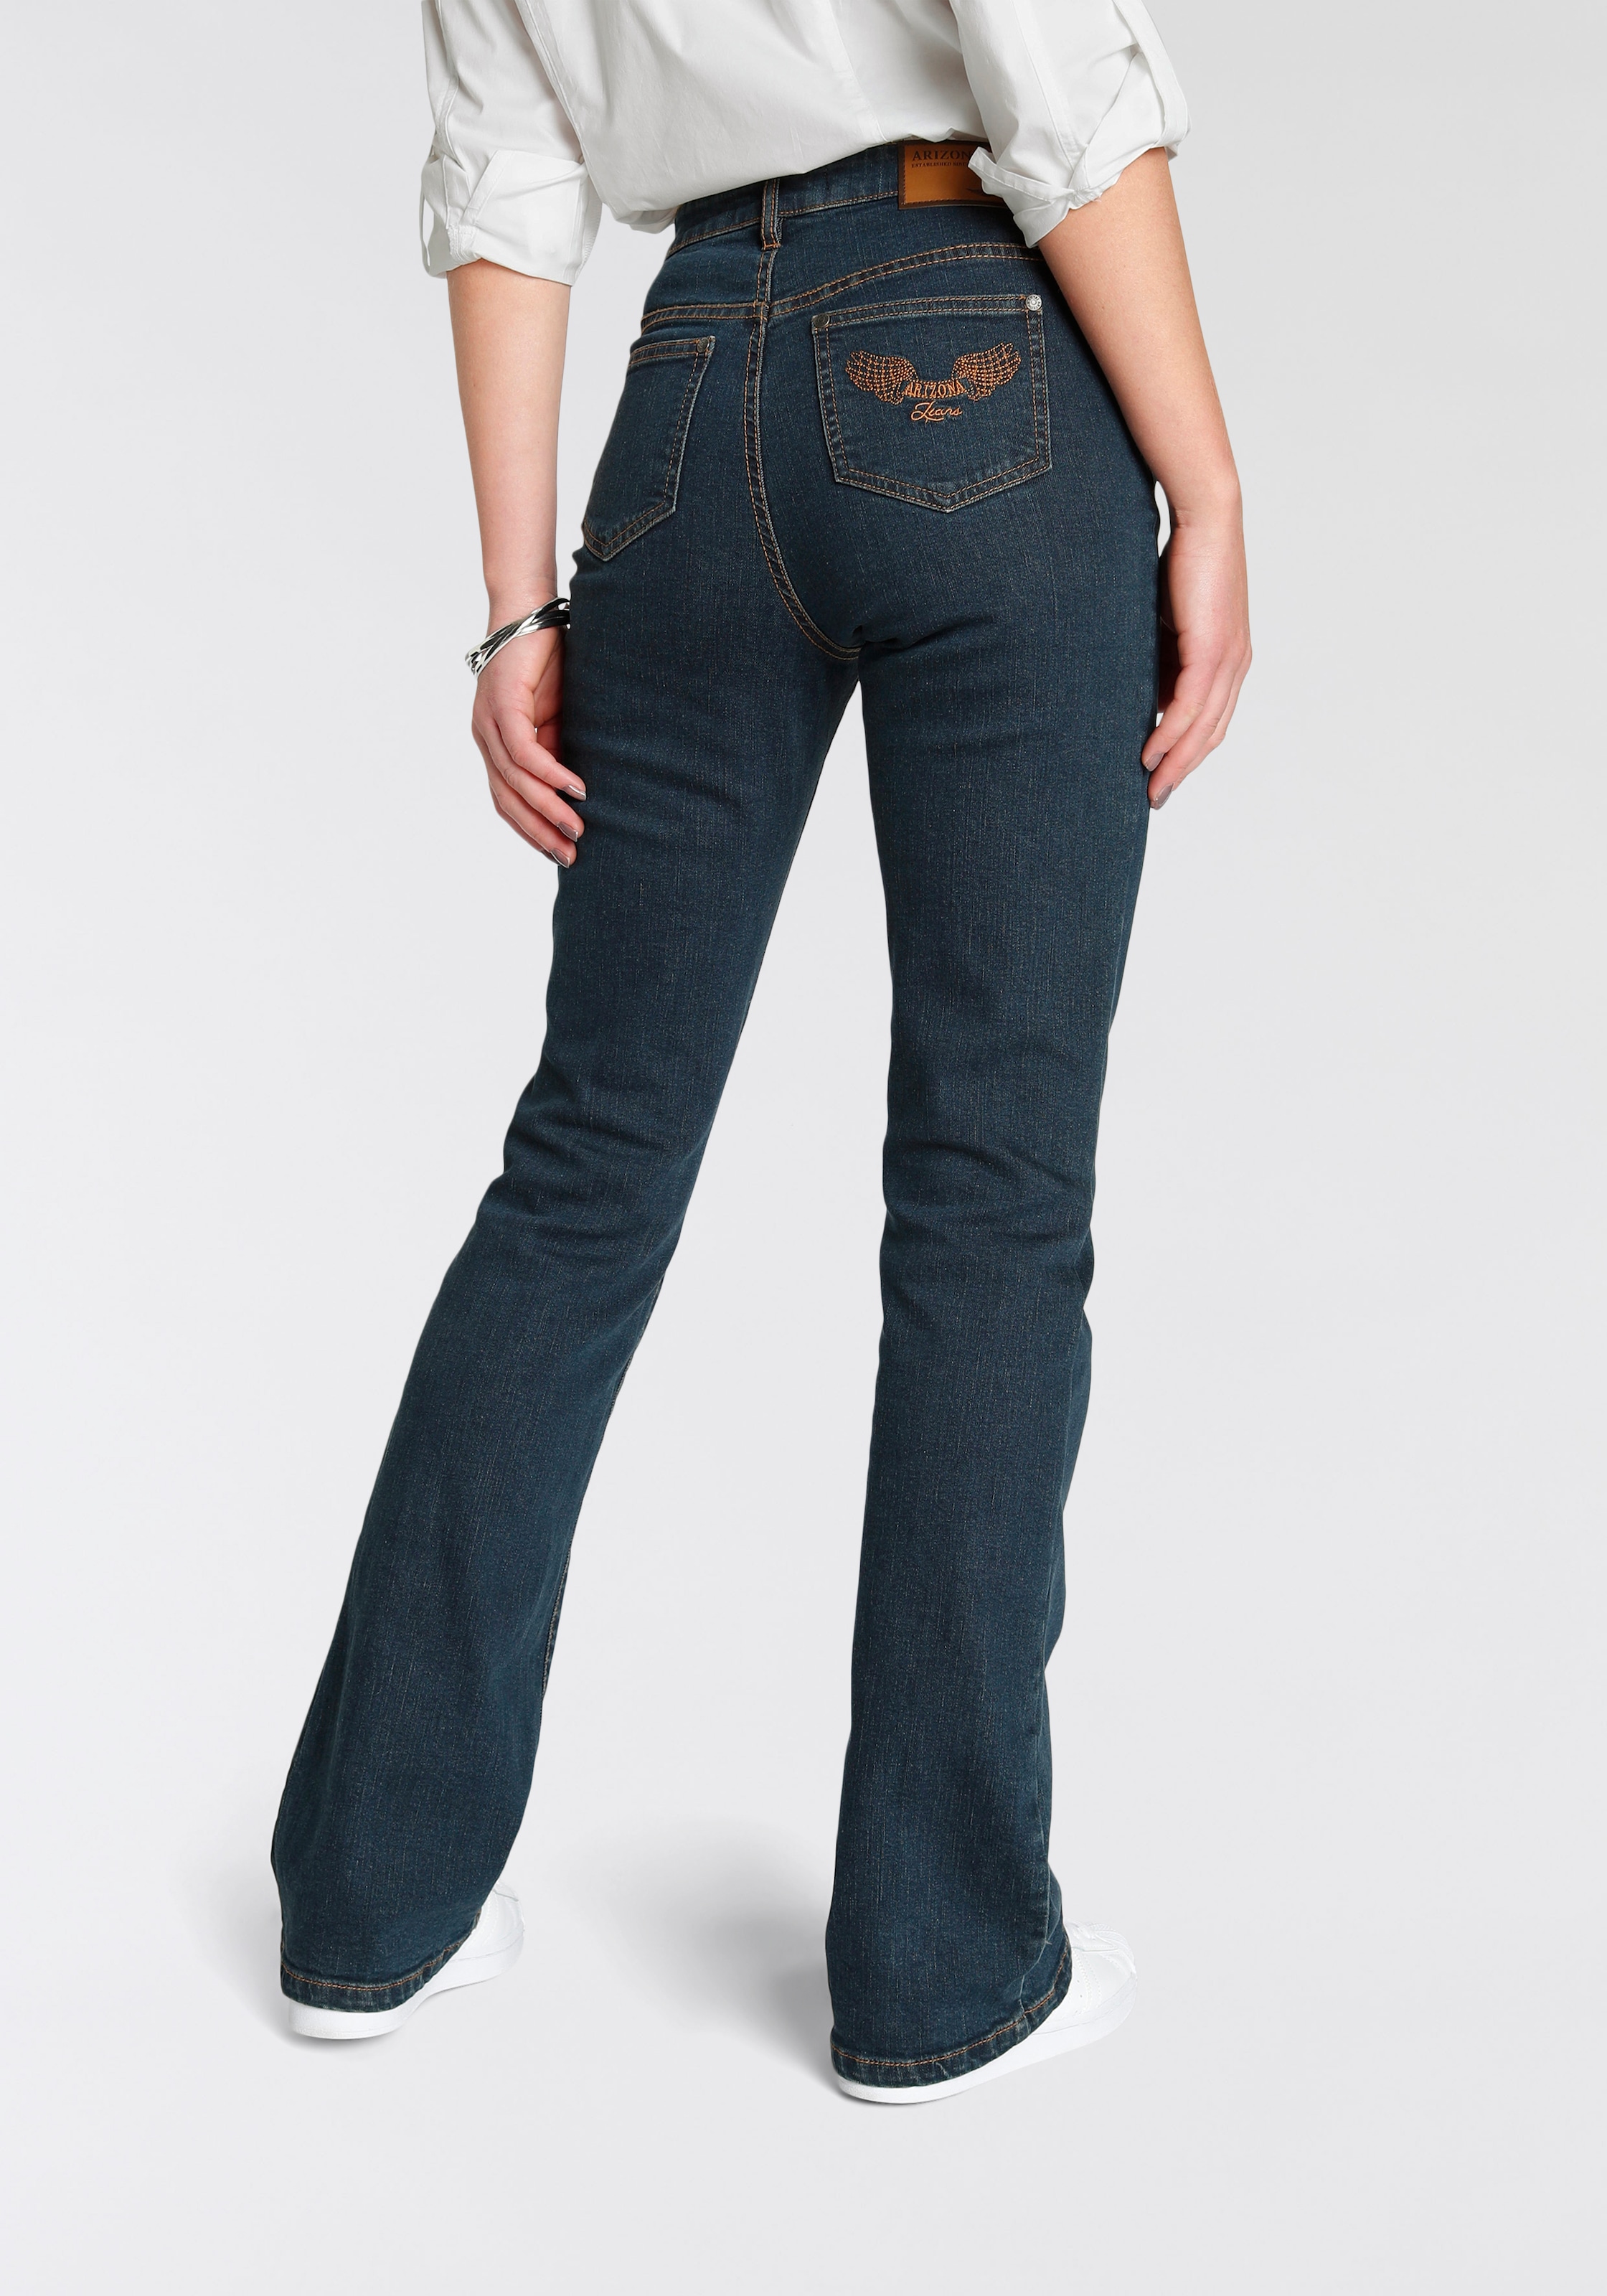 Arizona Bootcut-Jeans »Comfort-Fit«, High BAUR Waist kaufen 